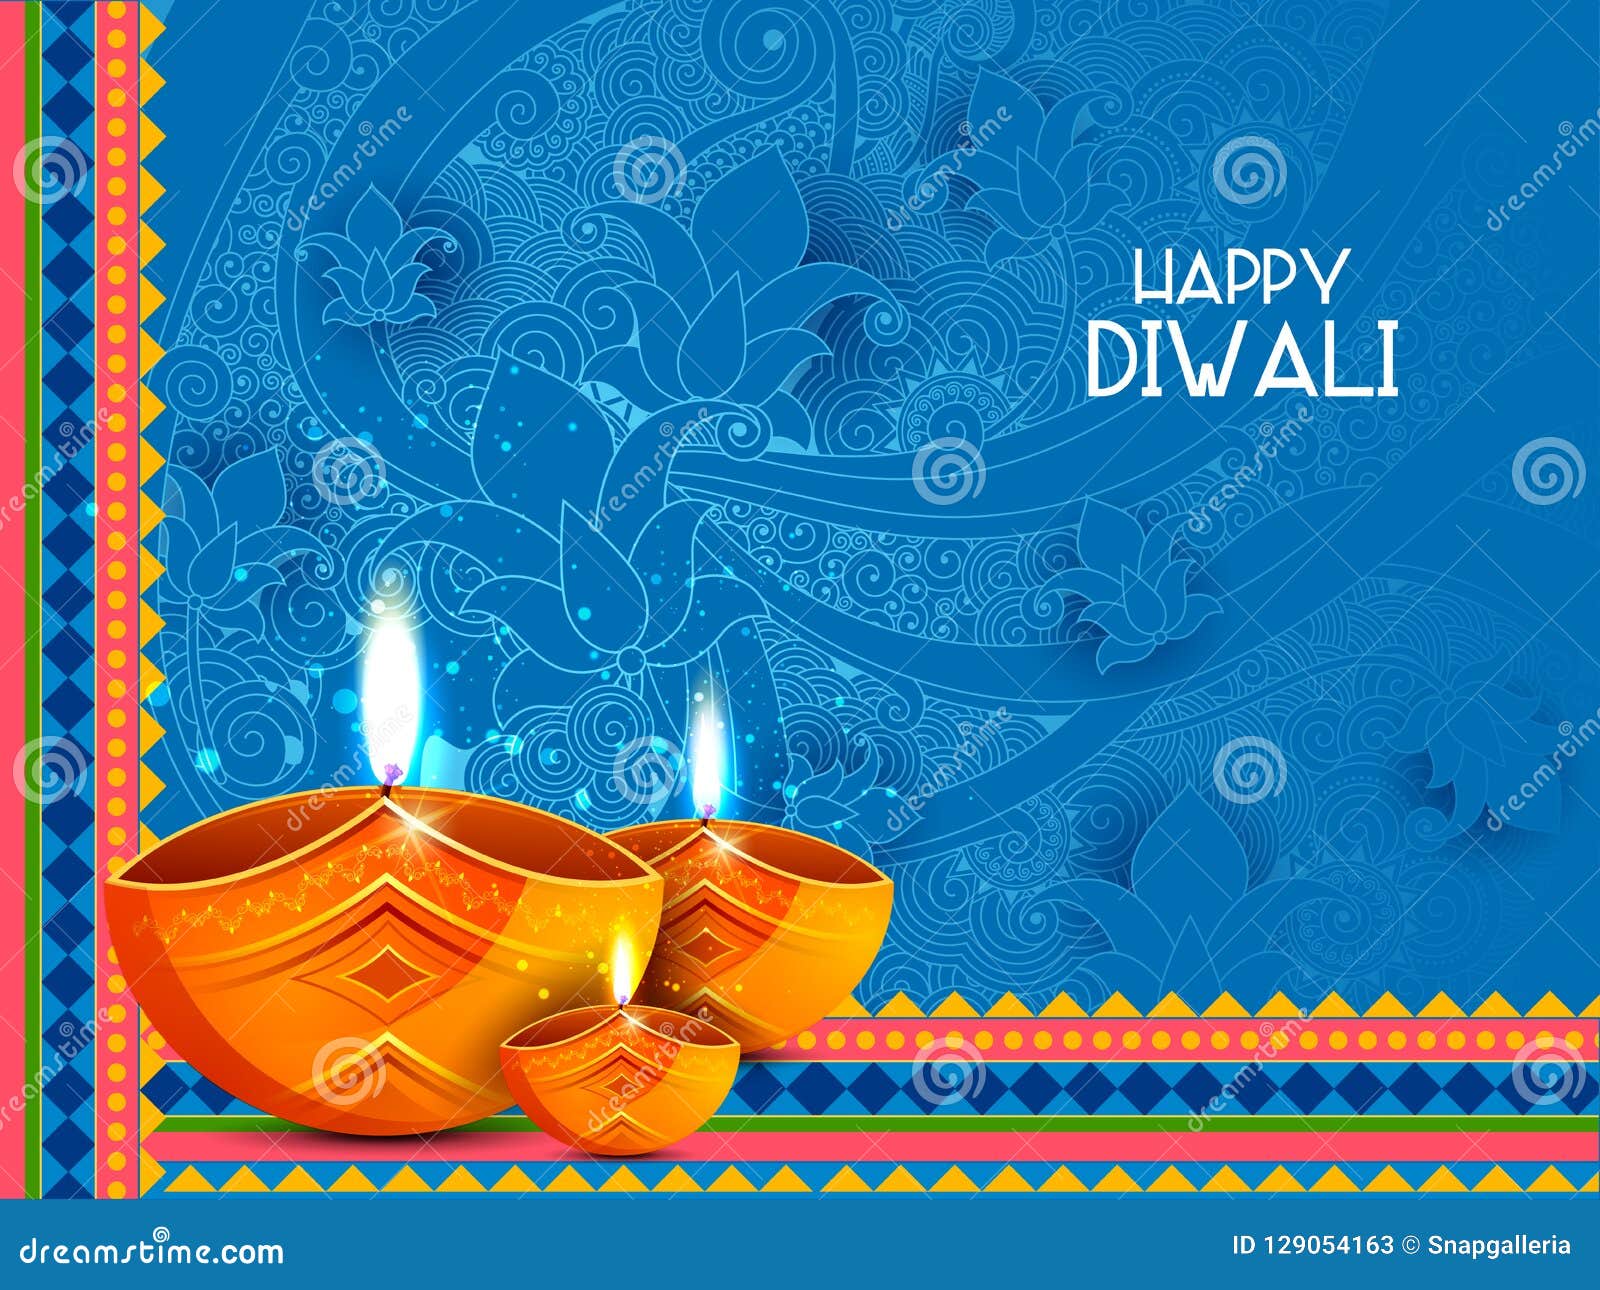 Illustration of Decorated Diya for Happy Diwali Holiday Background Stock  Vector - Illustration of india, deepawali: 129054163